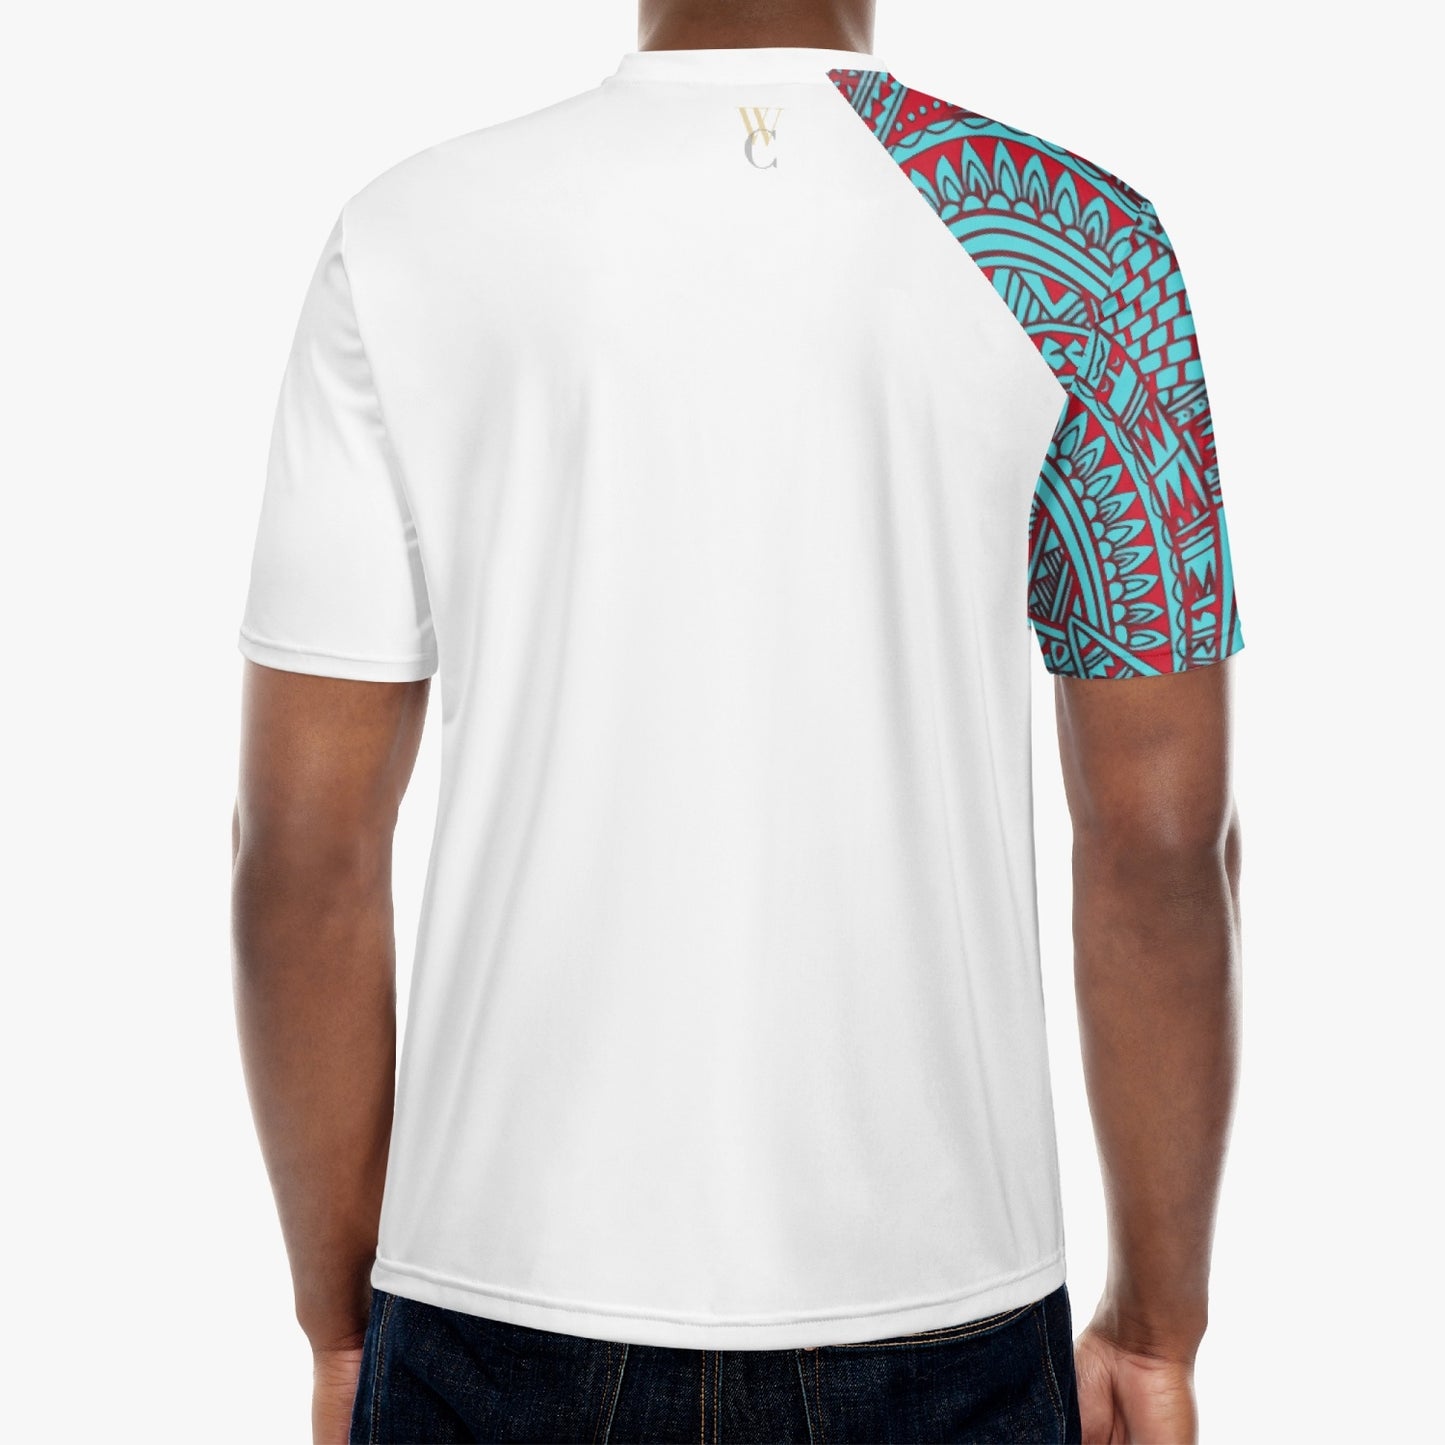 Polynesian - T-Shirt - Red/Blue